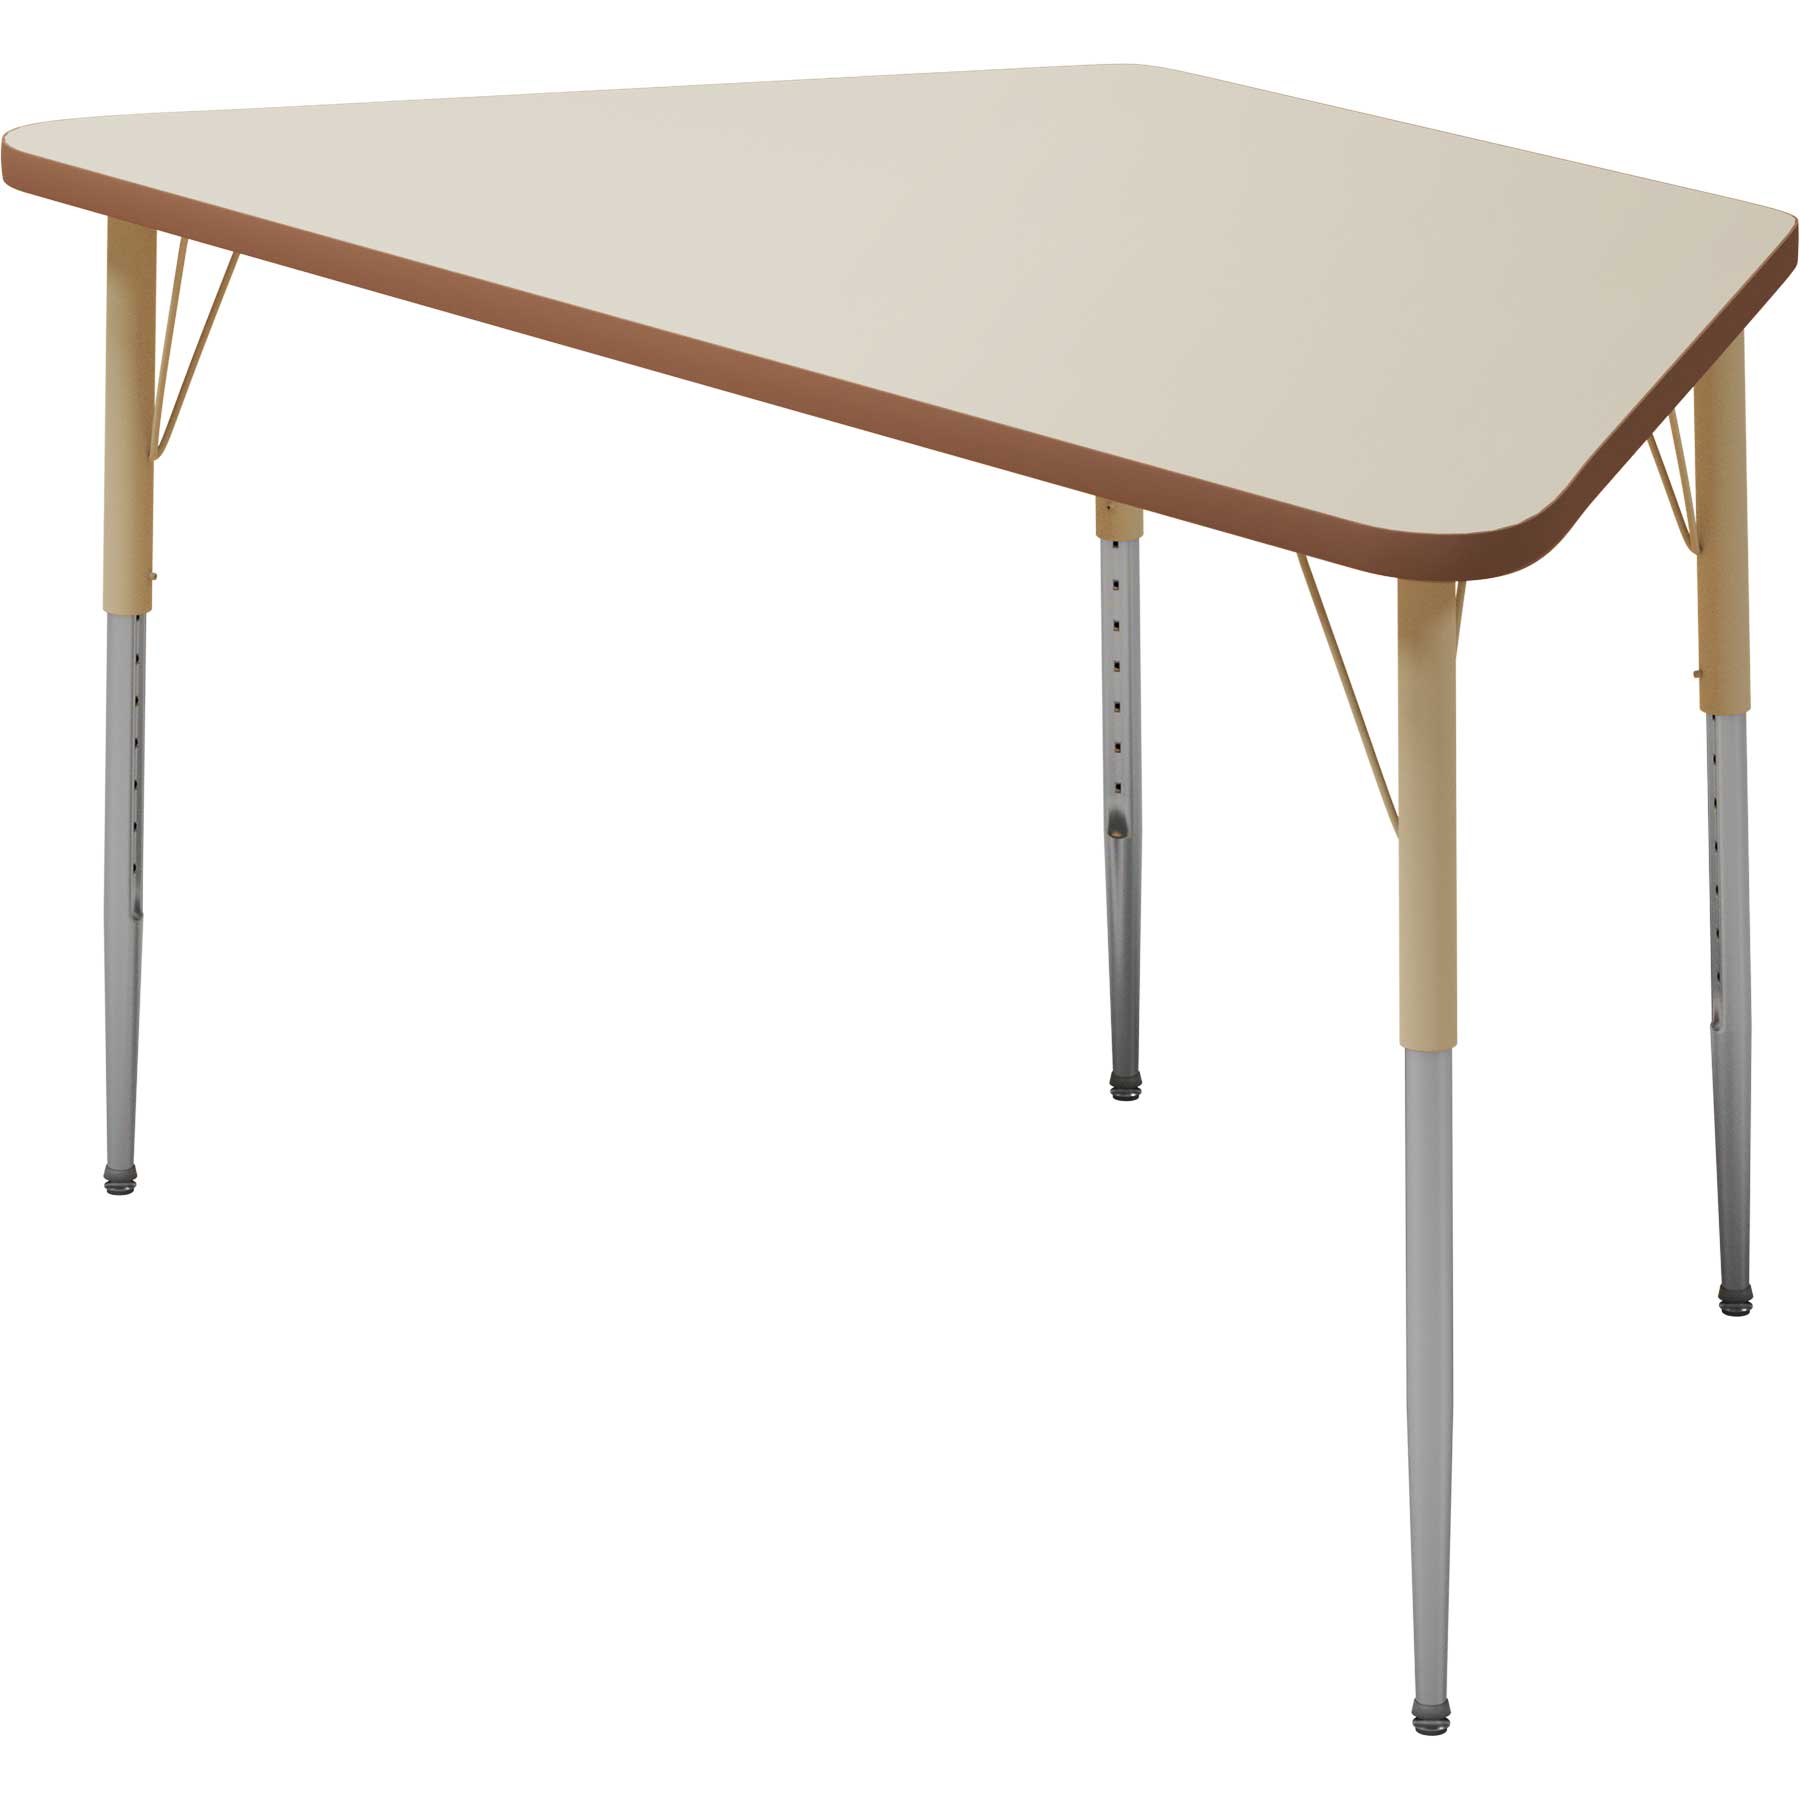 6510 Trapezoid Table adjustable